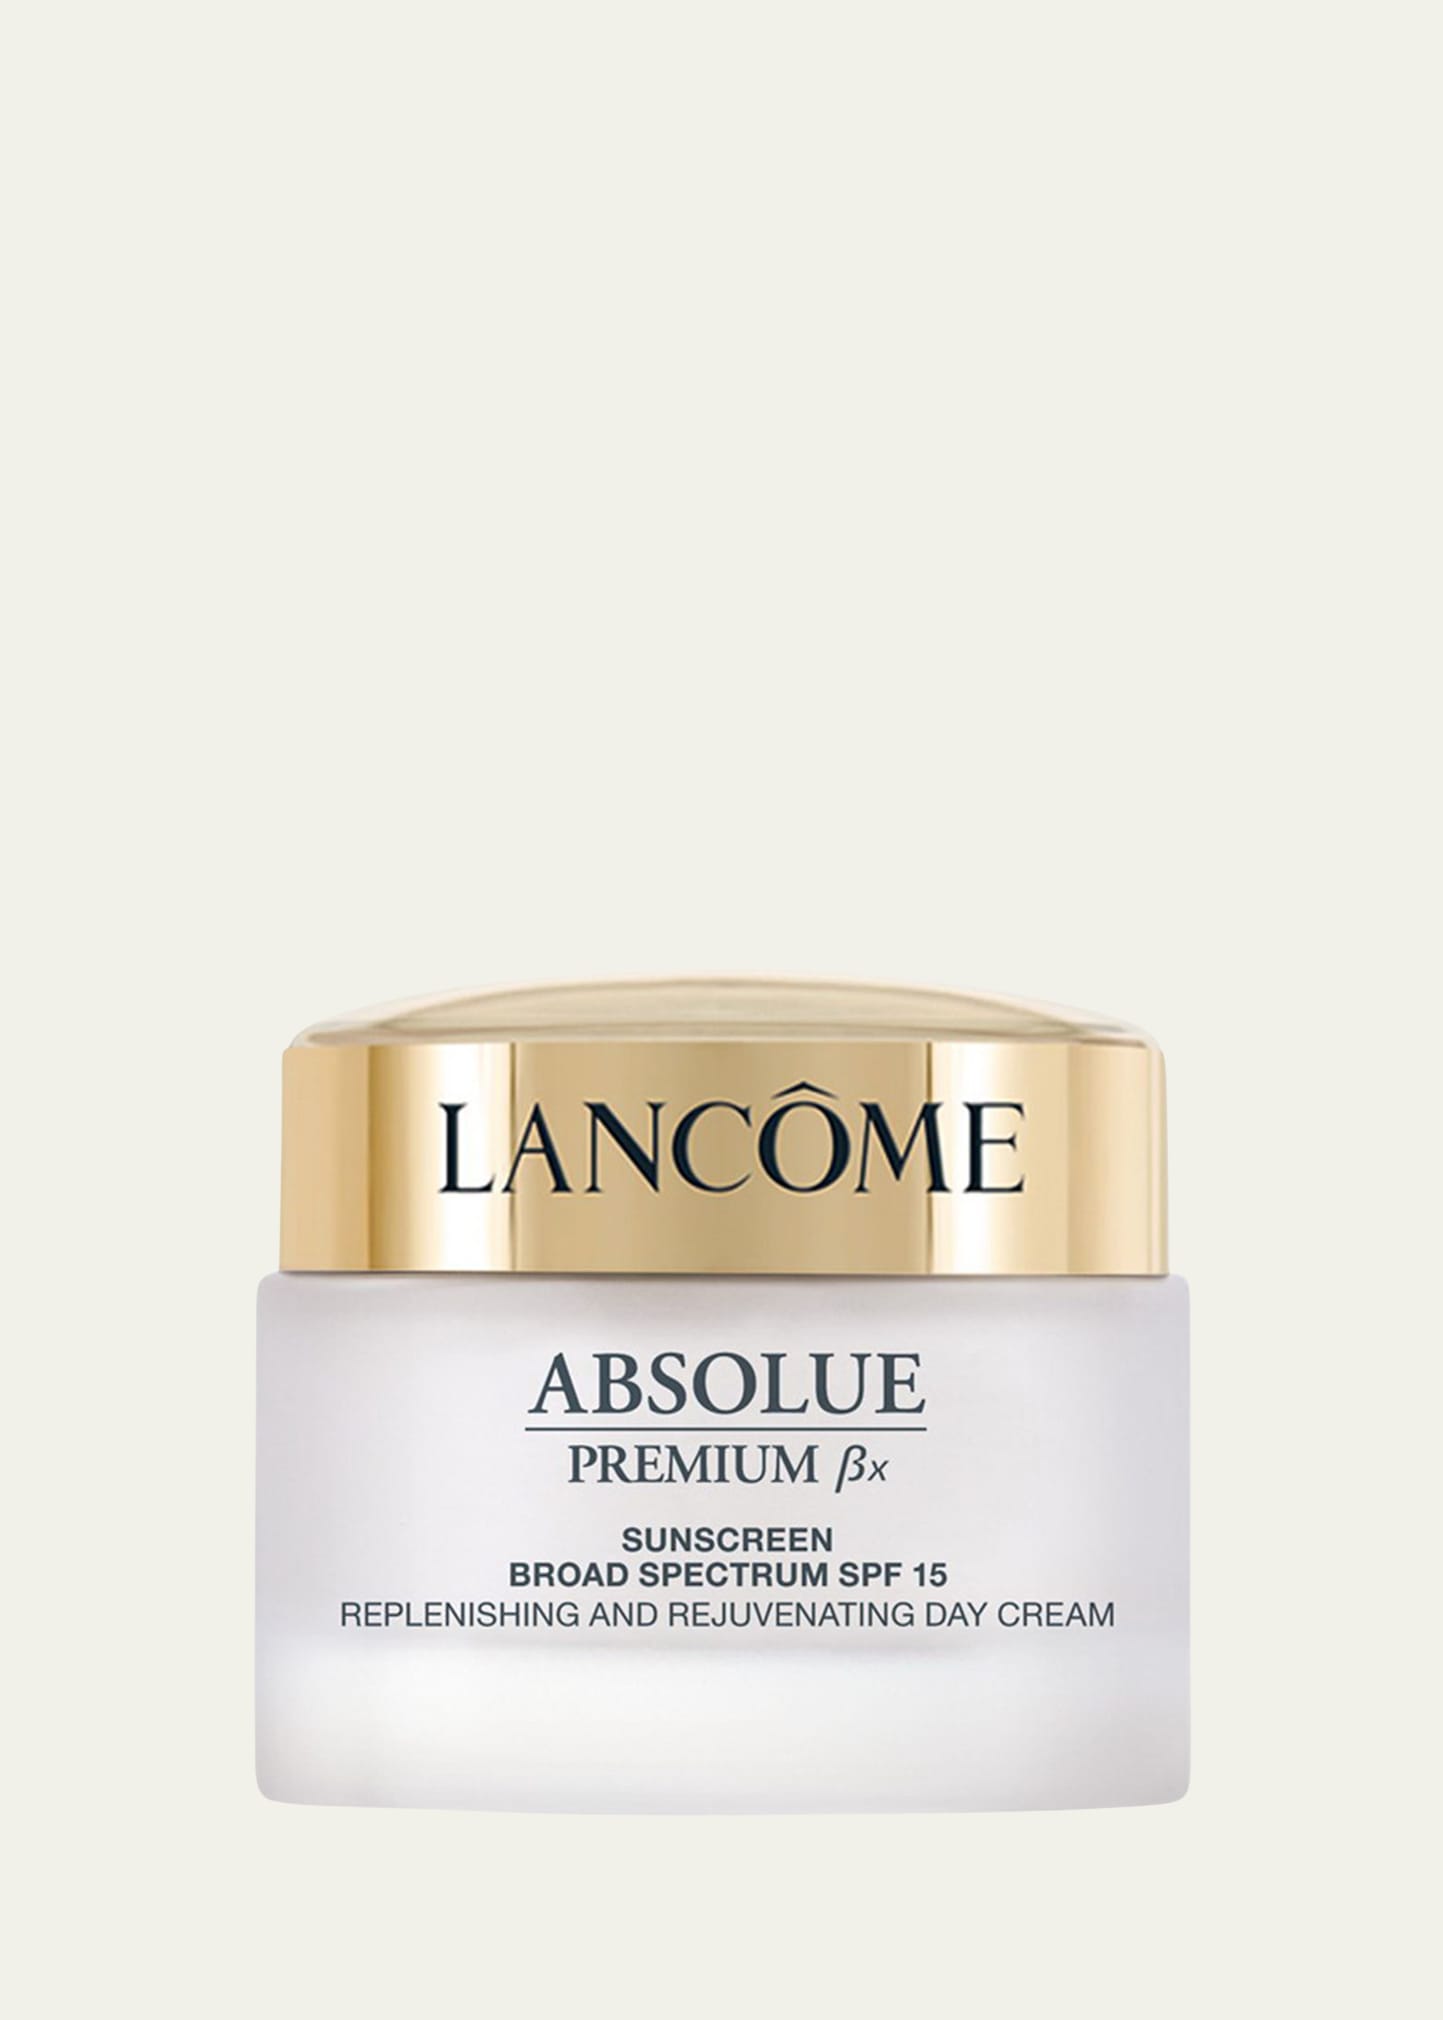 Absolue Premium Bx Replenishing and Rejuvenating Day Cream SPF 15, 2.6 oz.